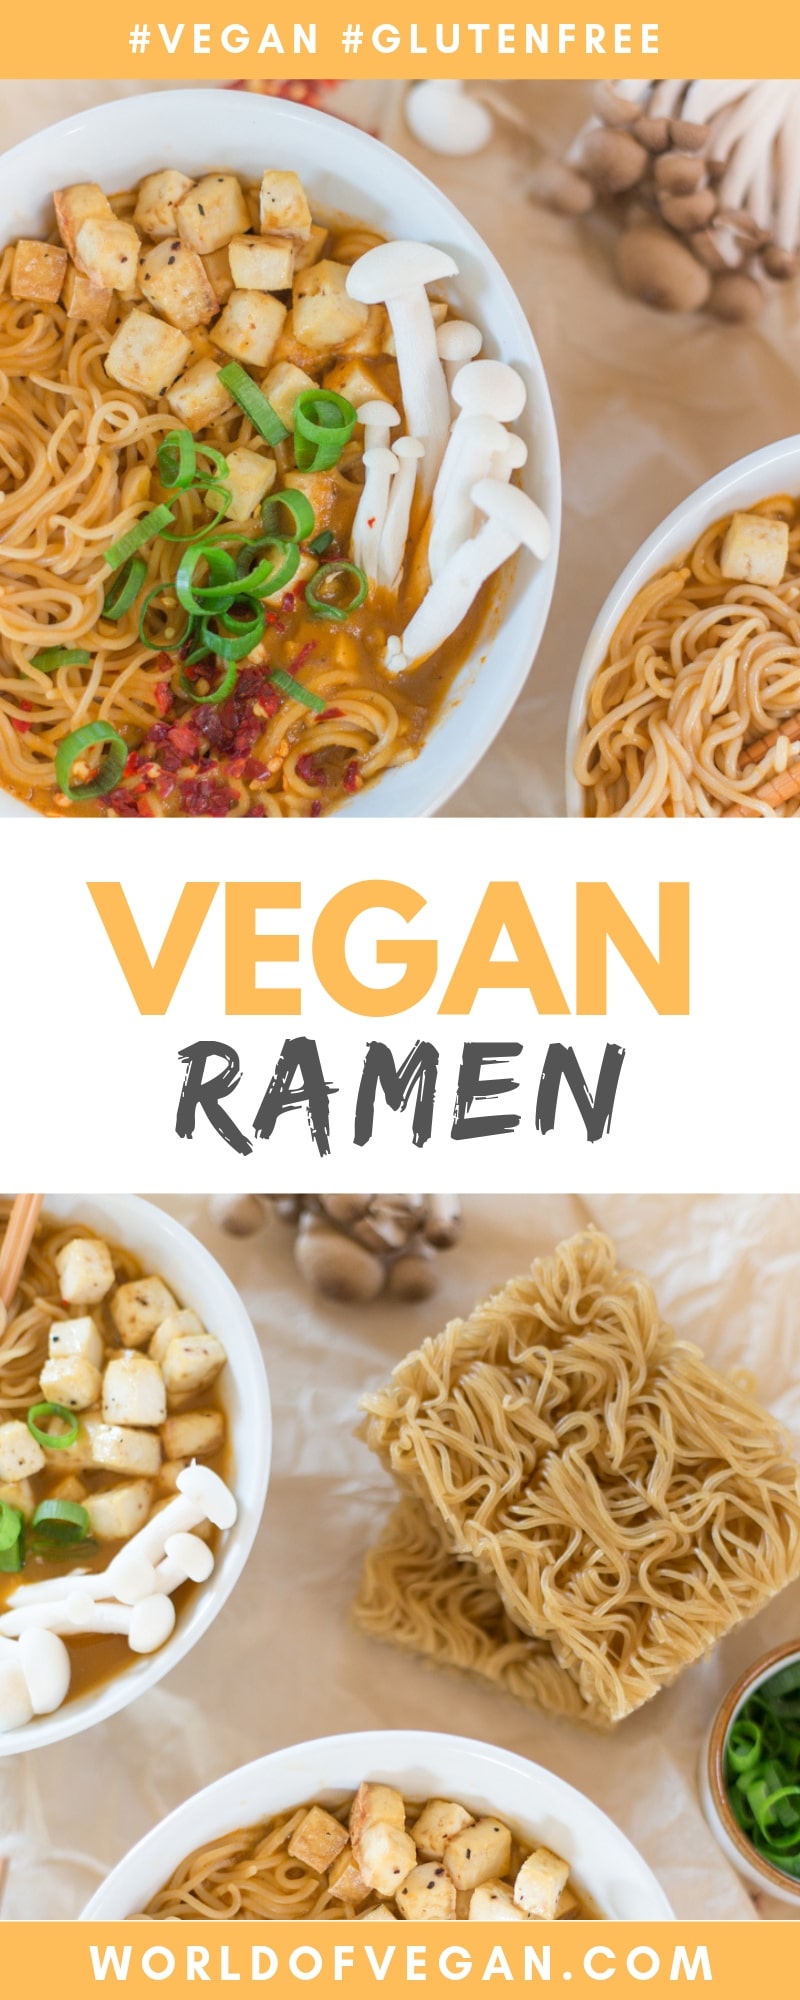 Vegan Ramen With Brown Rice Noodles | WorldofVegan.com #vegan #glutenfree #ramen #soup #recipe #dairyfree #worldofvegan